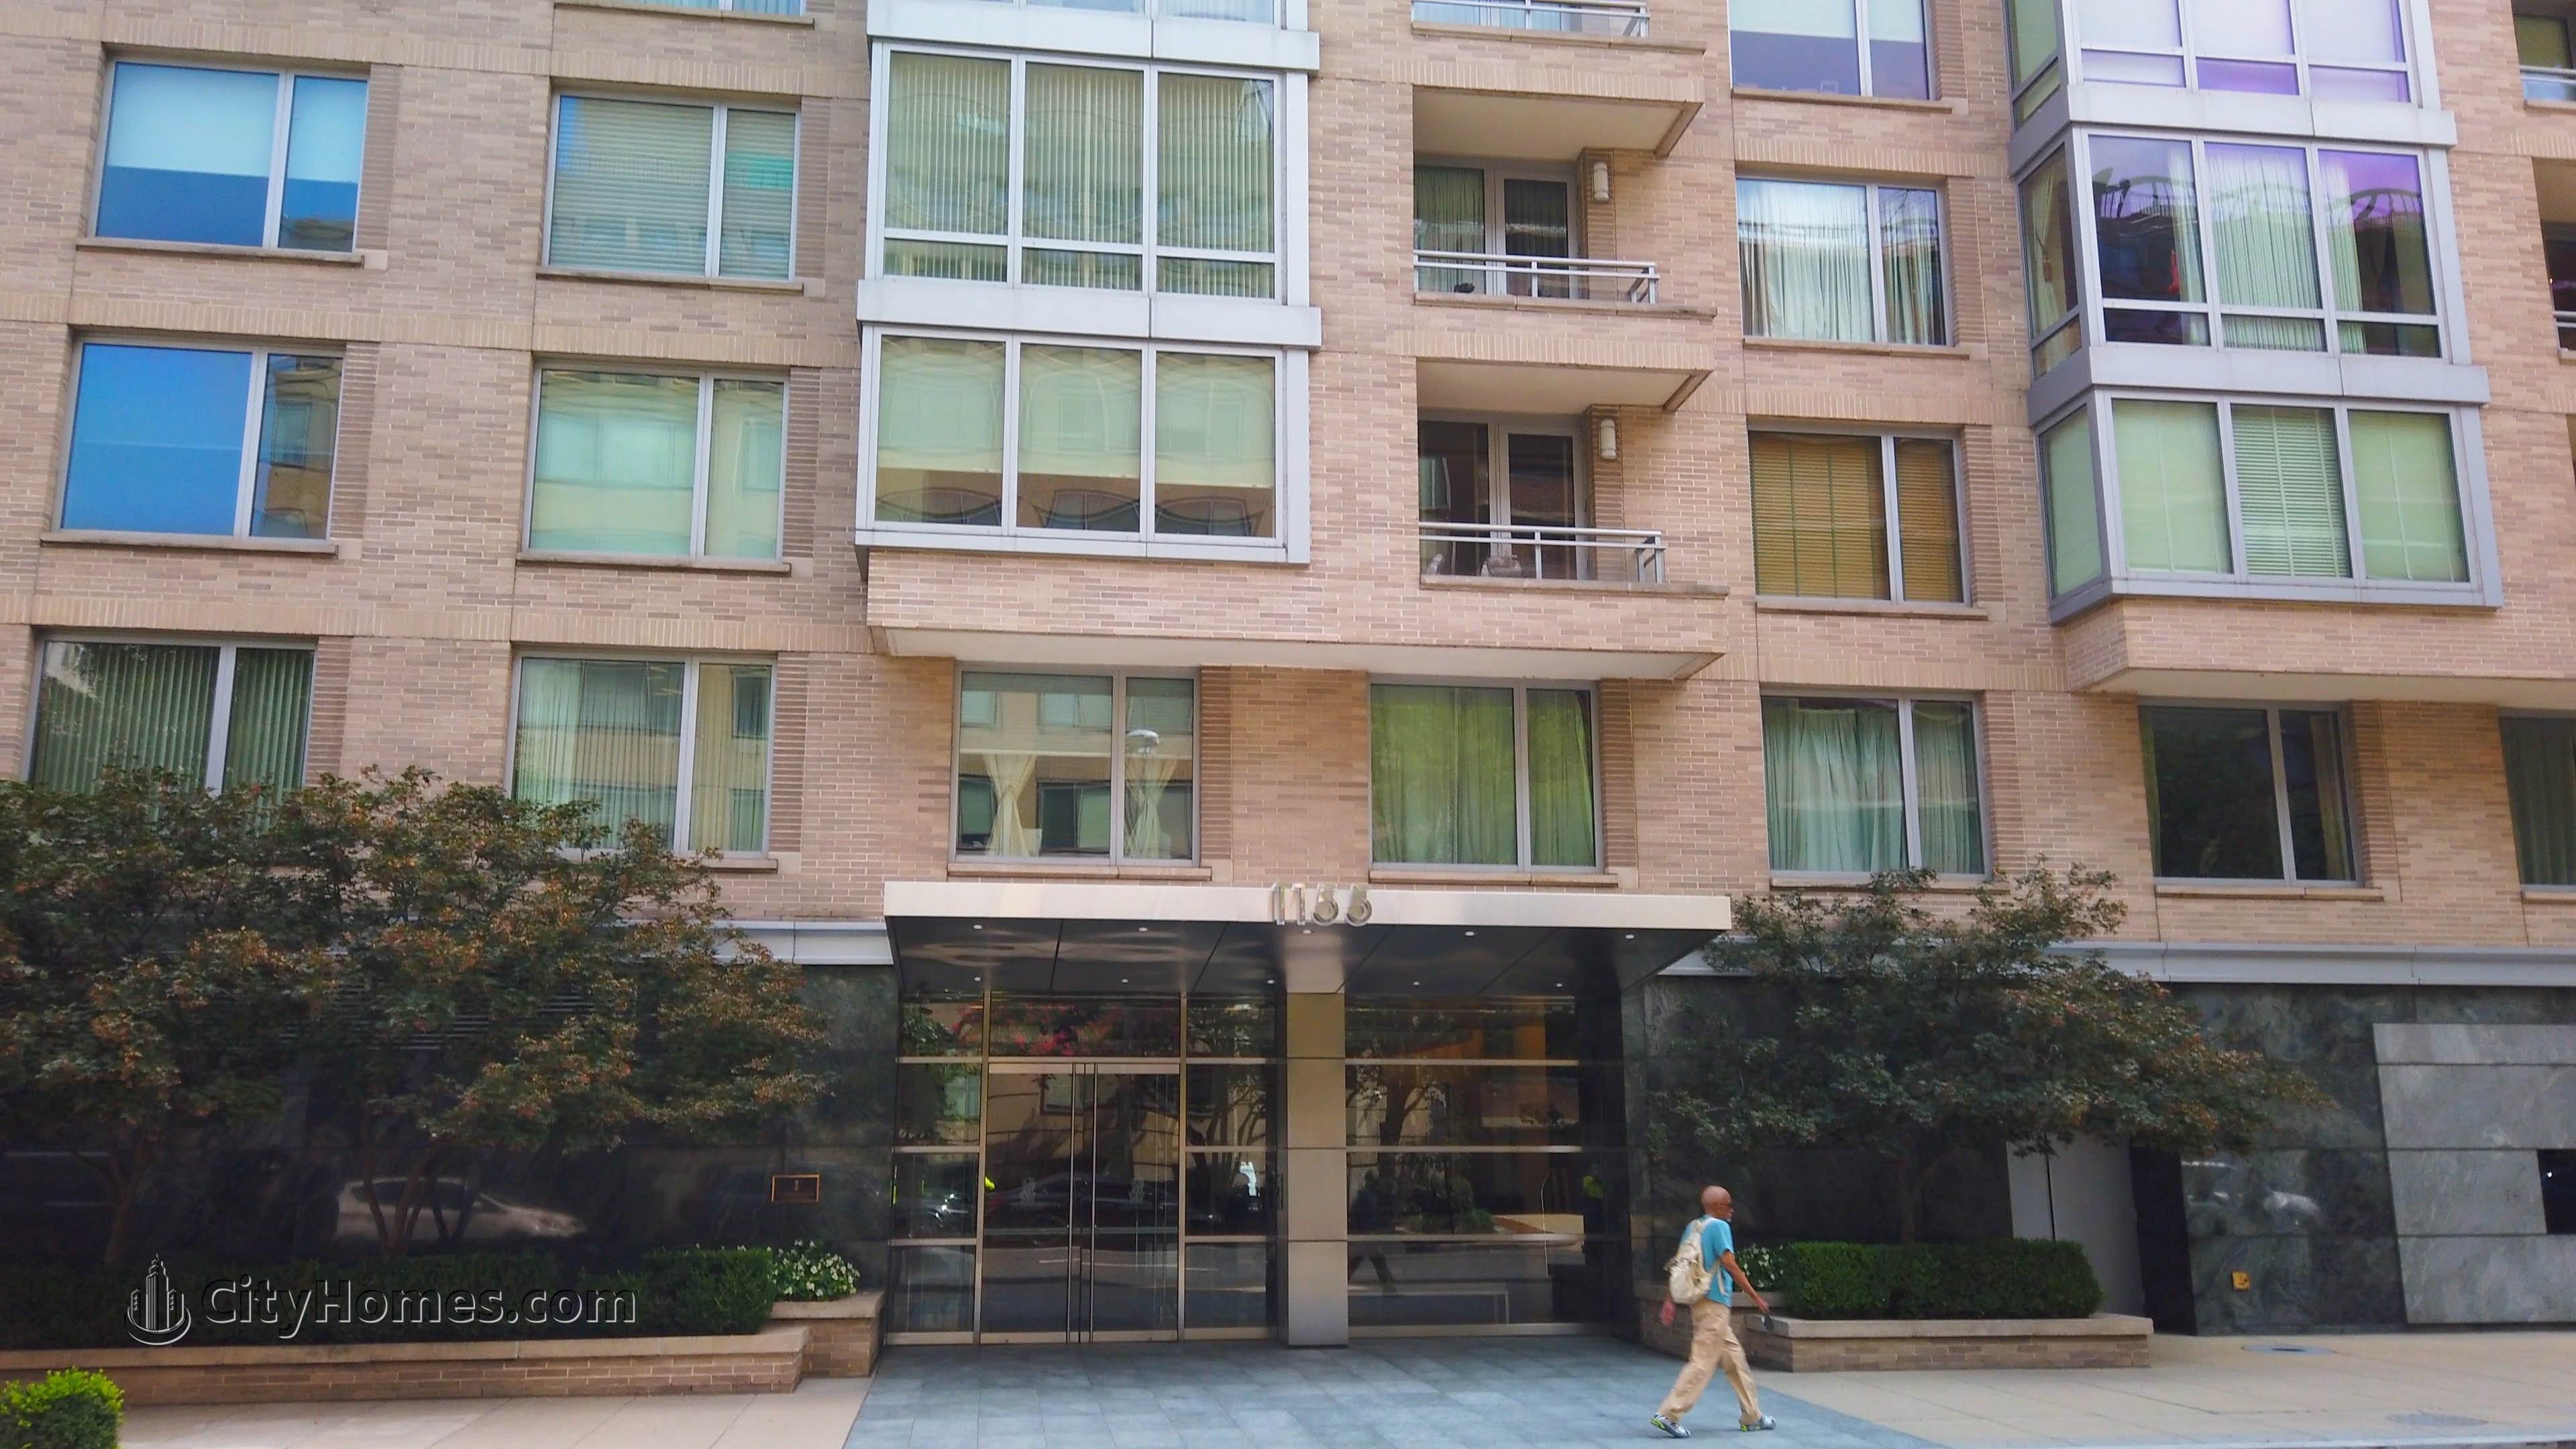 3. The Ritz-Carlton Washington building at 1111 & 1155 23rd Street NW, West End, Washington, DC 20037